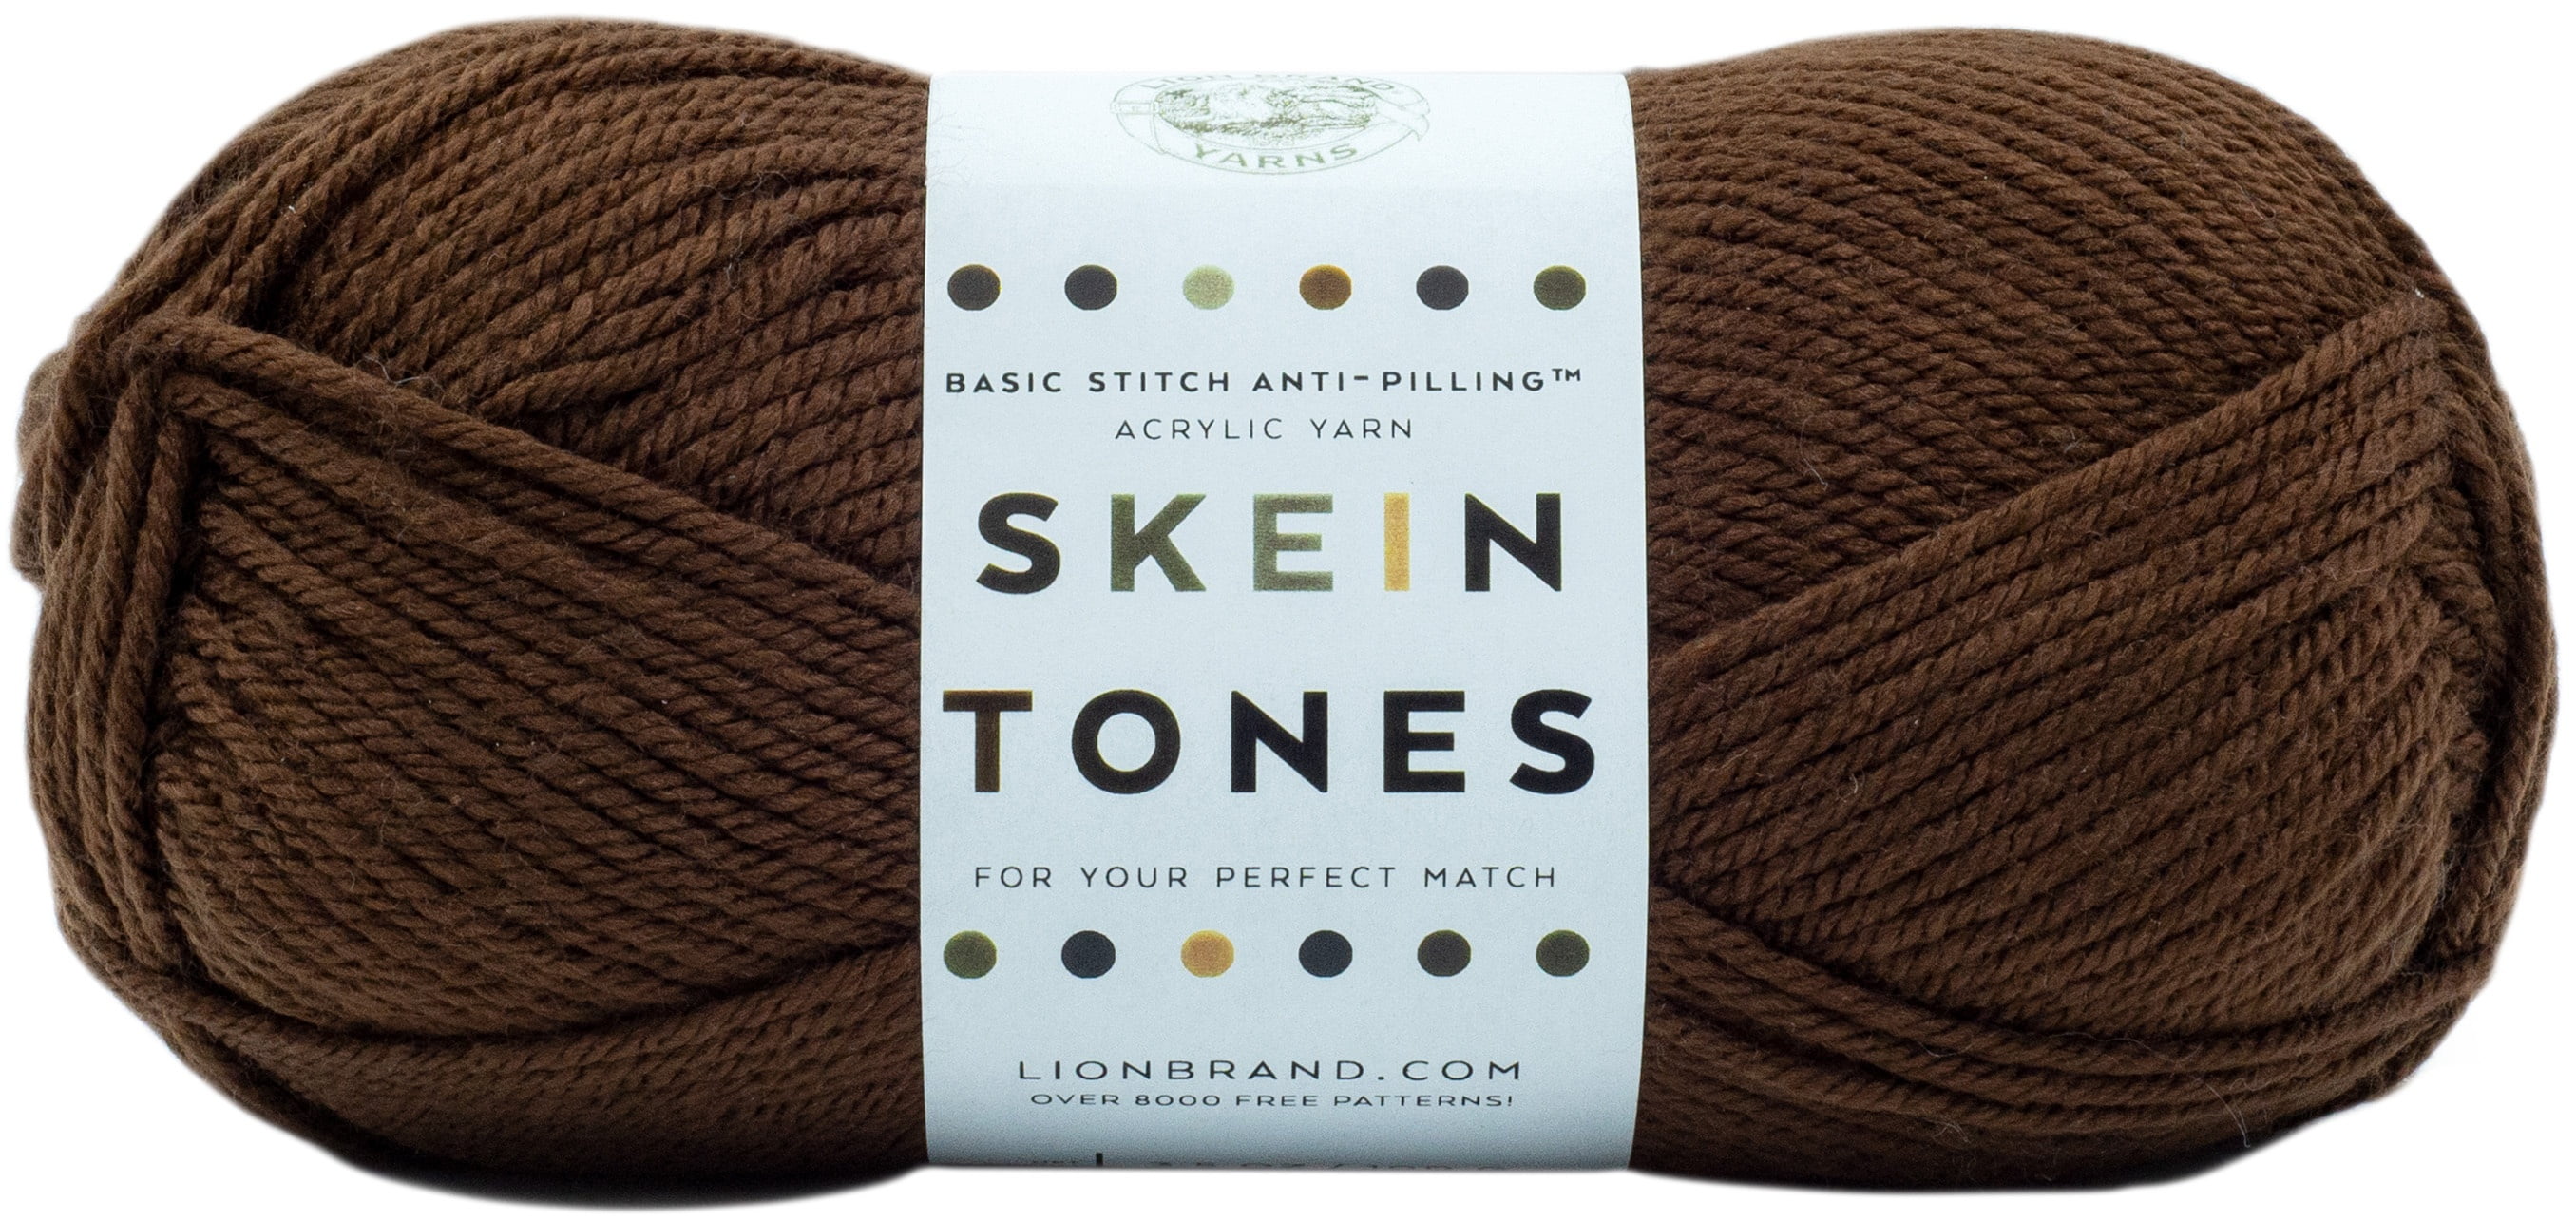 Lion Brand Basic Stitch Anti-Pilling Yarn-Skein Tones /Truffle - 3  Pack/New.